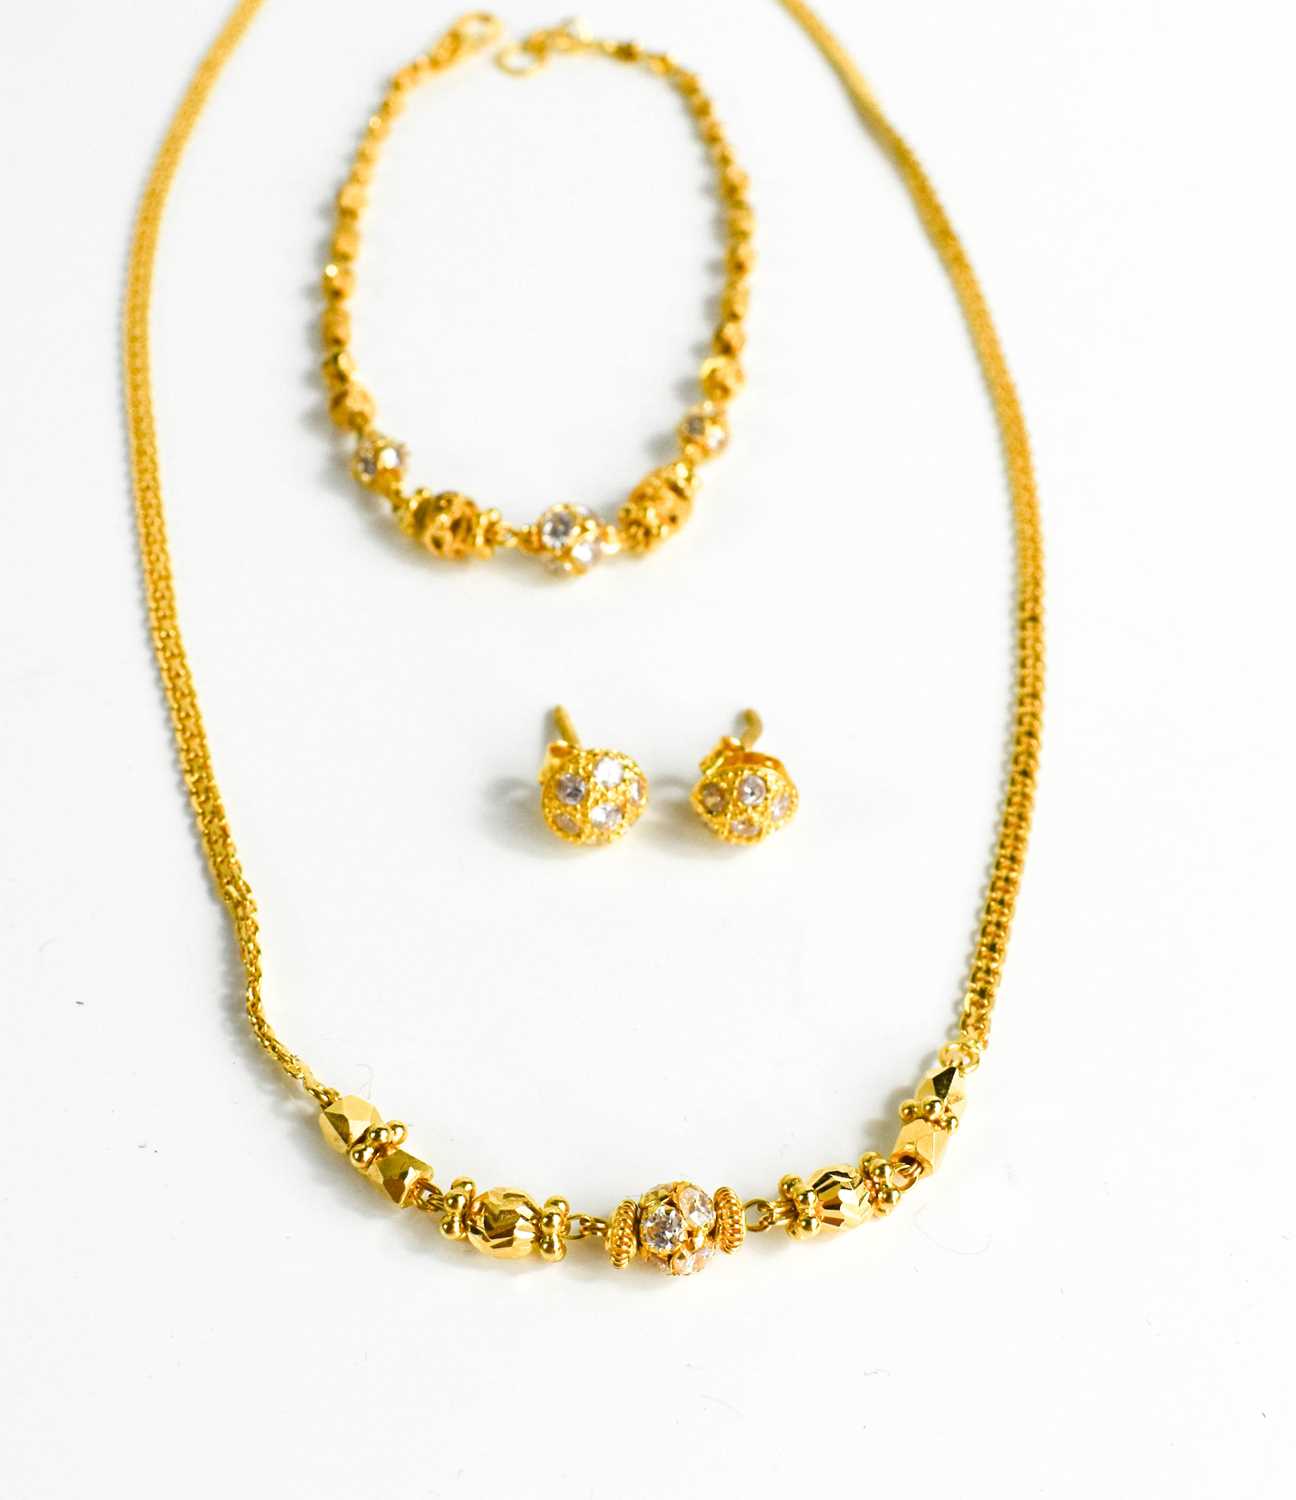 235-GBR3145 - 22K Gold Bracelet For Women with Cz, Black Stones & Black  Beads | Gold bracelet for women, 22k gold bracelet, Black beads